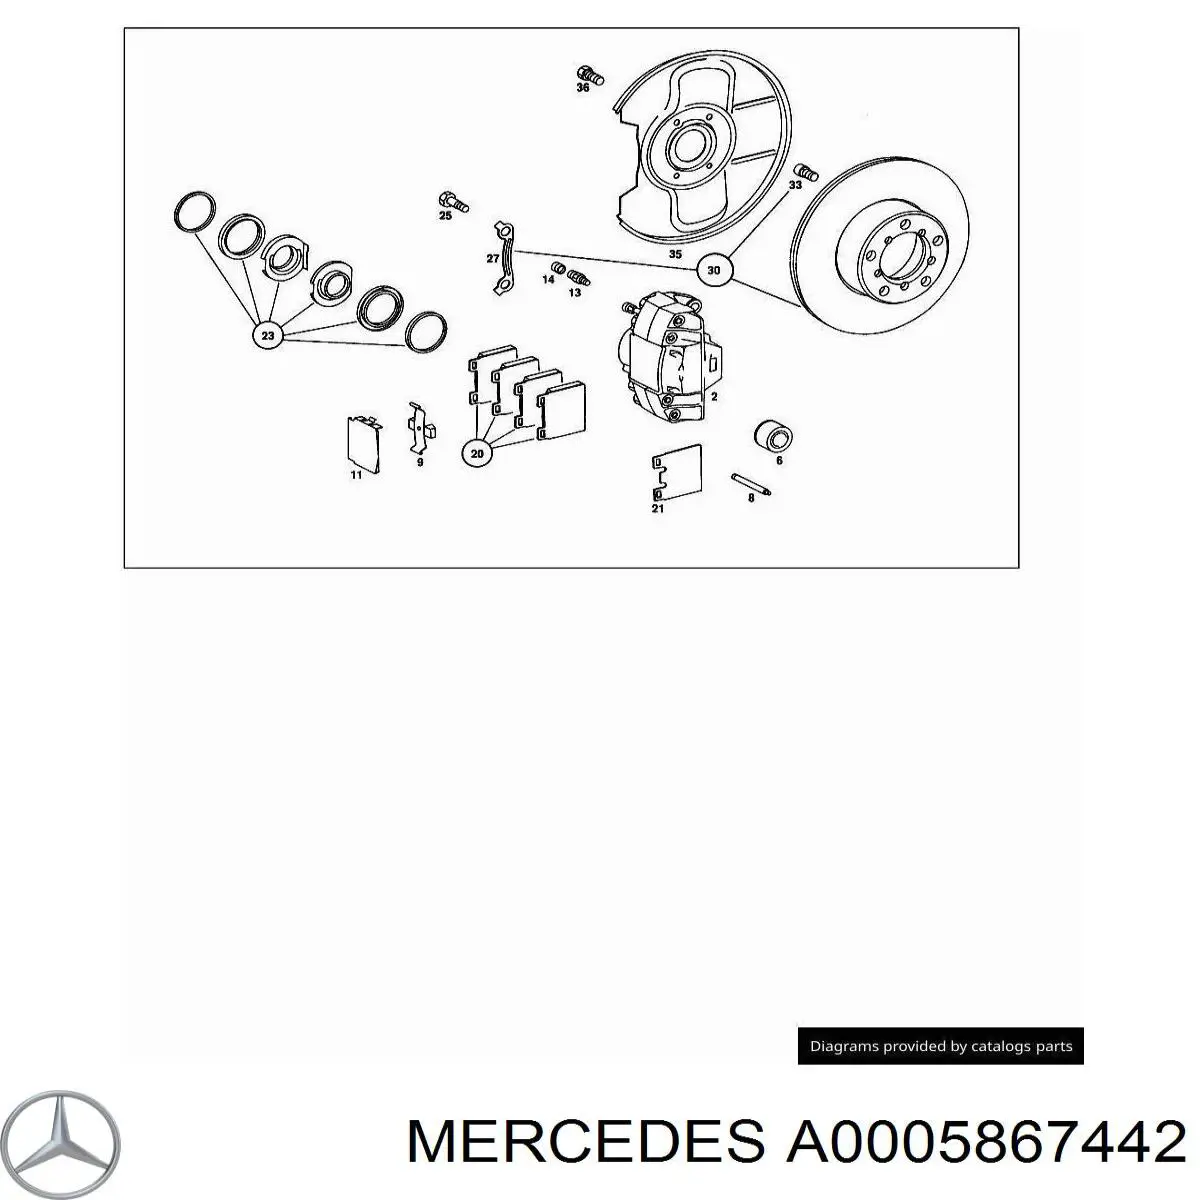 A0005867442 Mercedes juego de reparación, pinza de freno trasero